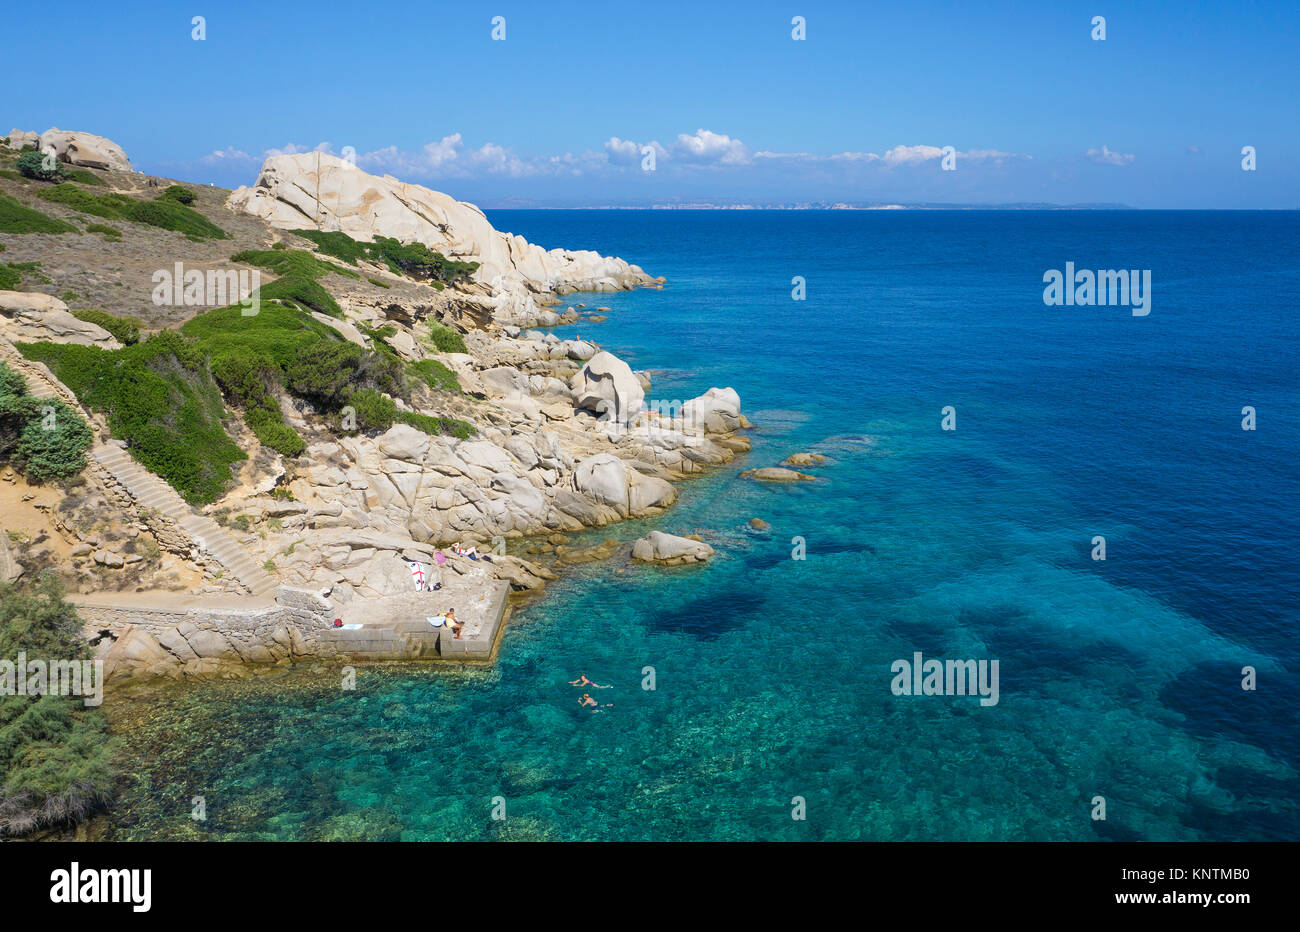 Swimming and snorkling at the rocky coast of Capo Testa, Santa Teresa di Gallura, Sardinia, Italy, Mediterranean sea, Europe Stock Photo